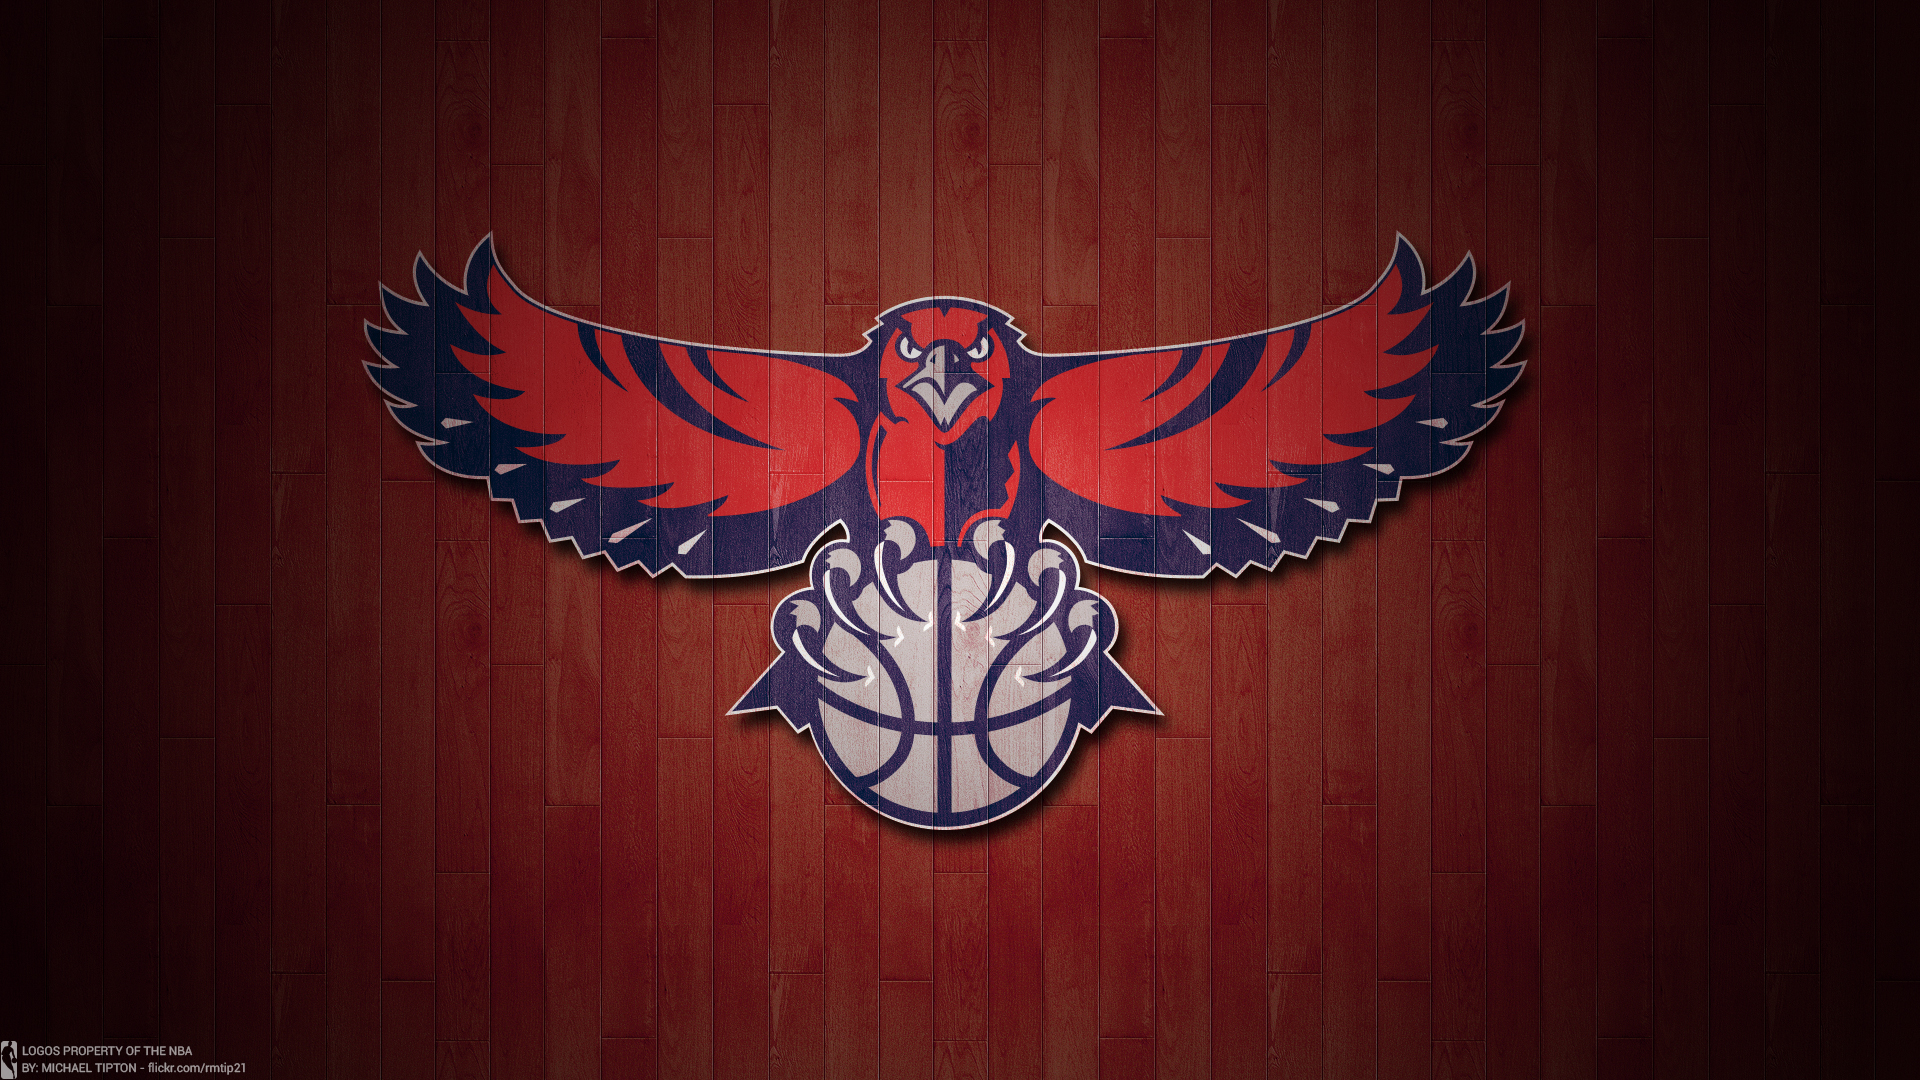 Atlanta Hawks Basketball team by Michael Tipton